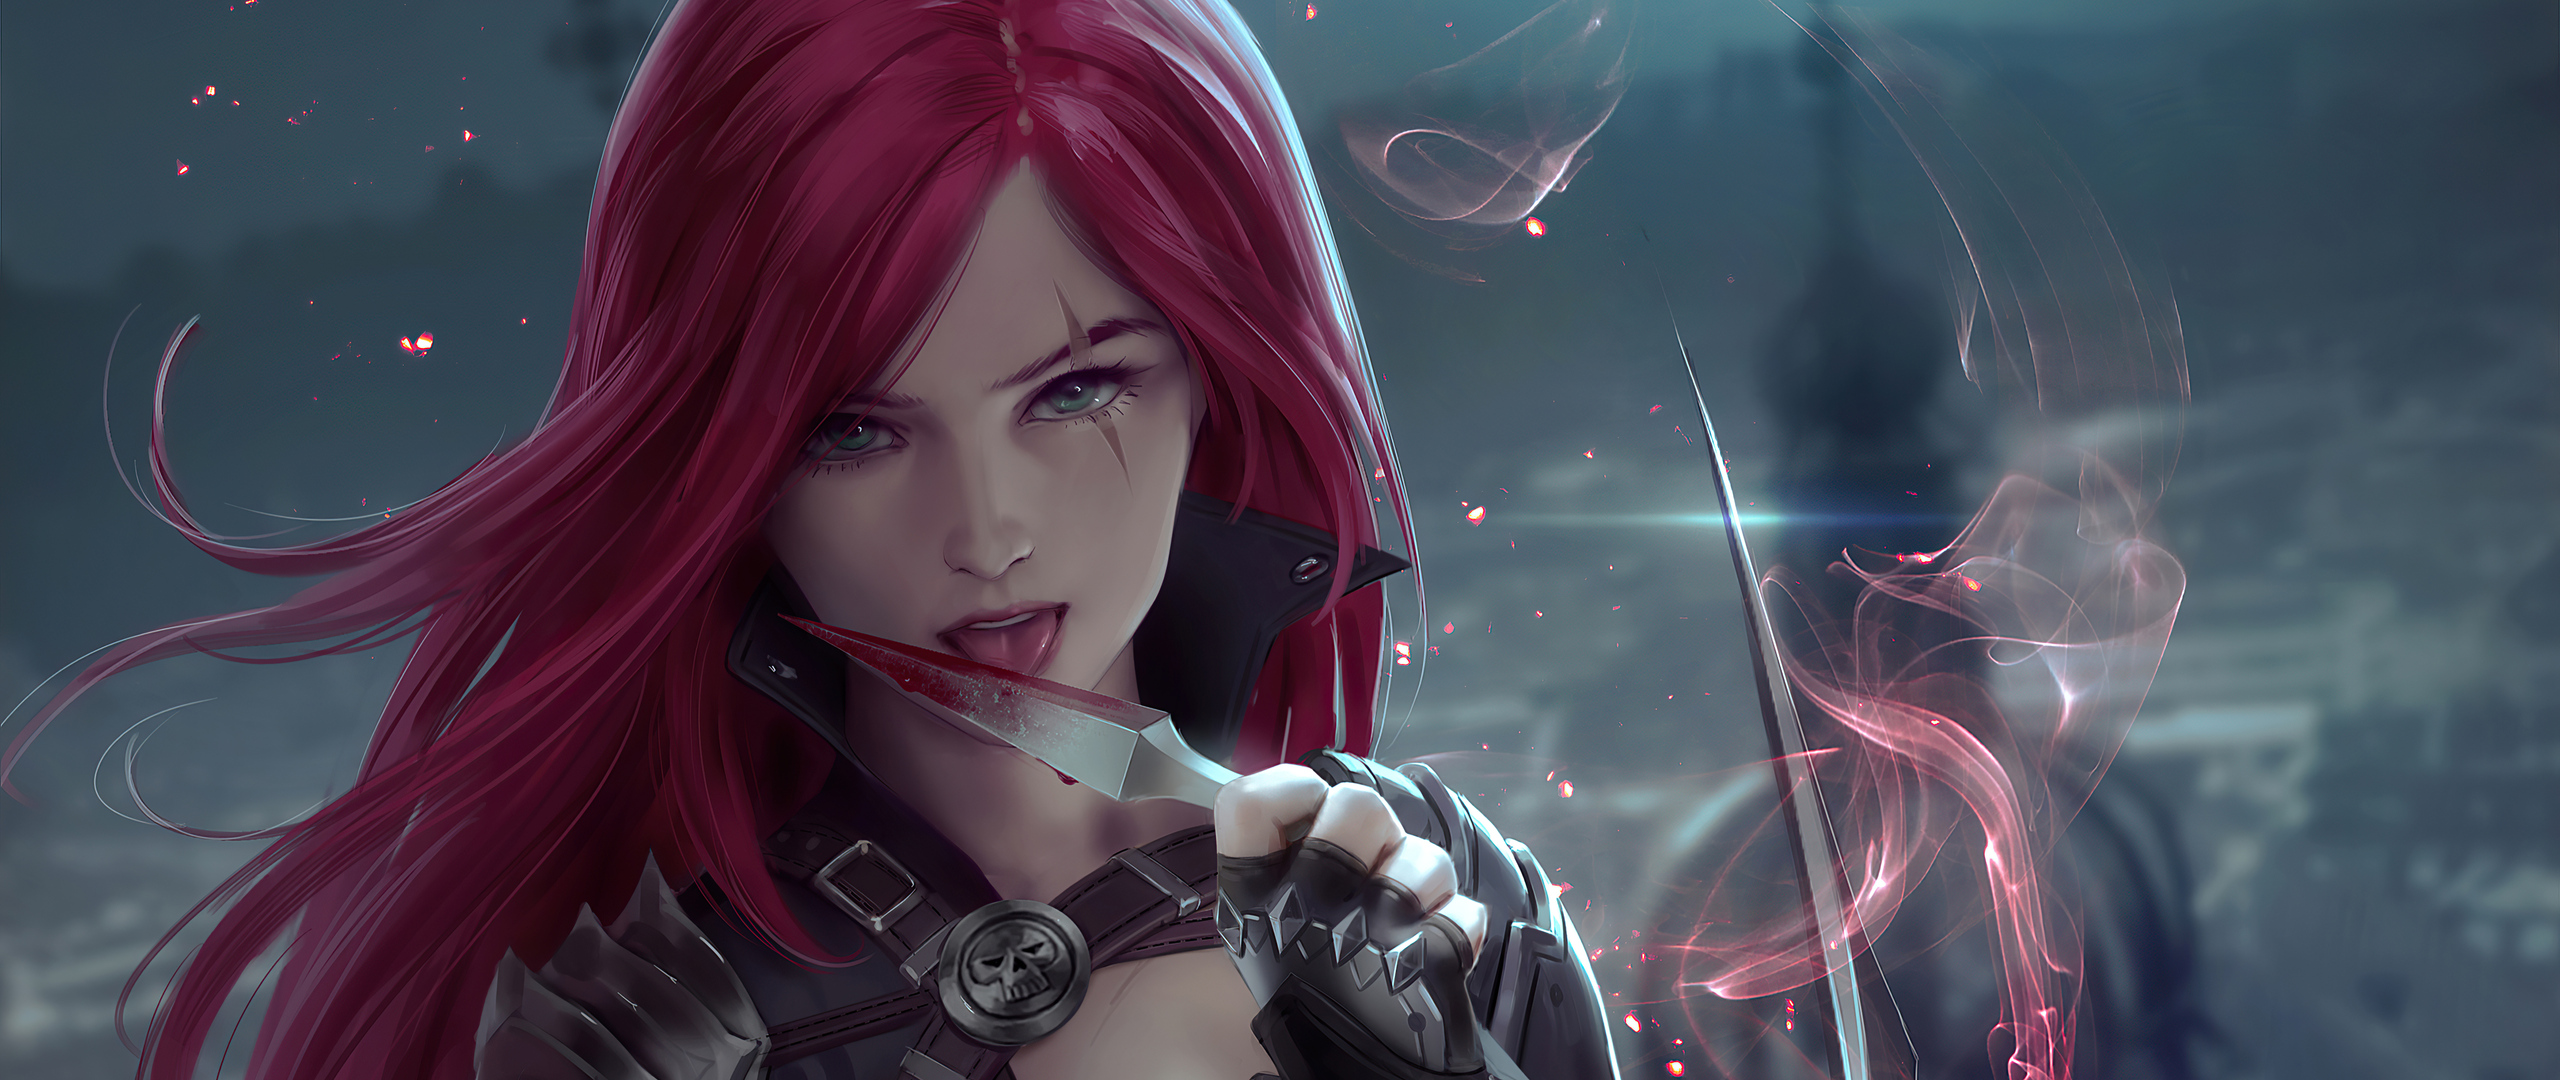 redhead-fantasy-warrior-girl-with-sword-4k-hf.jpg